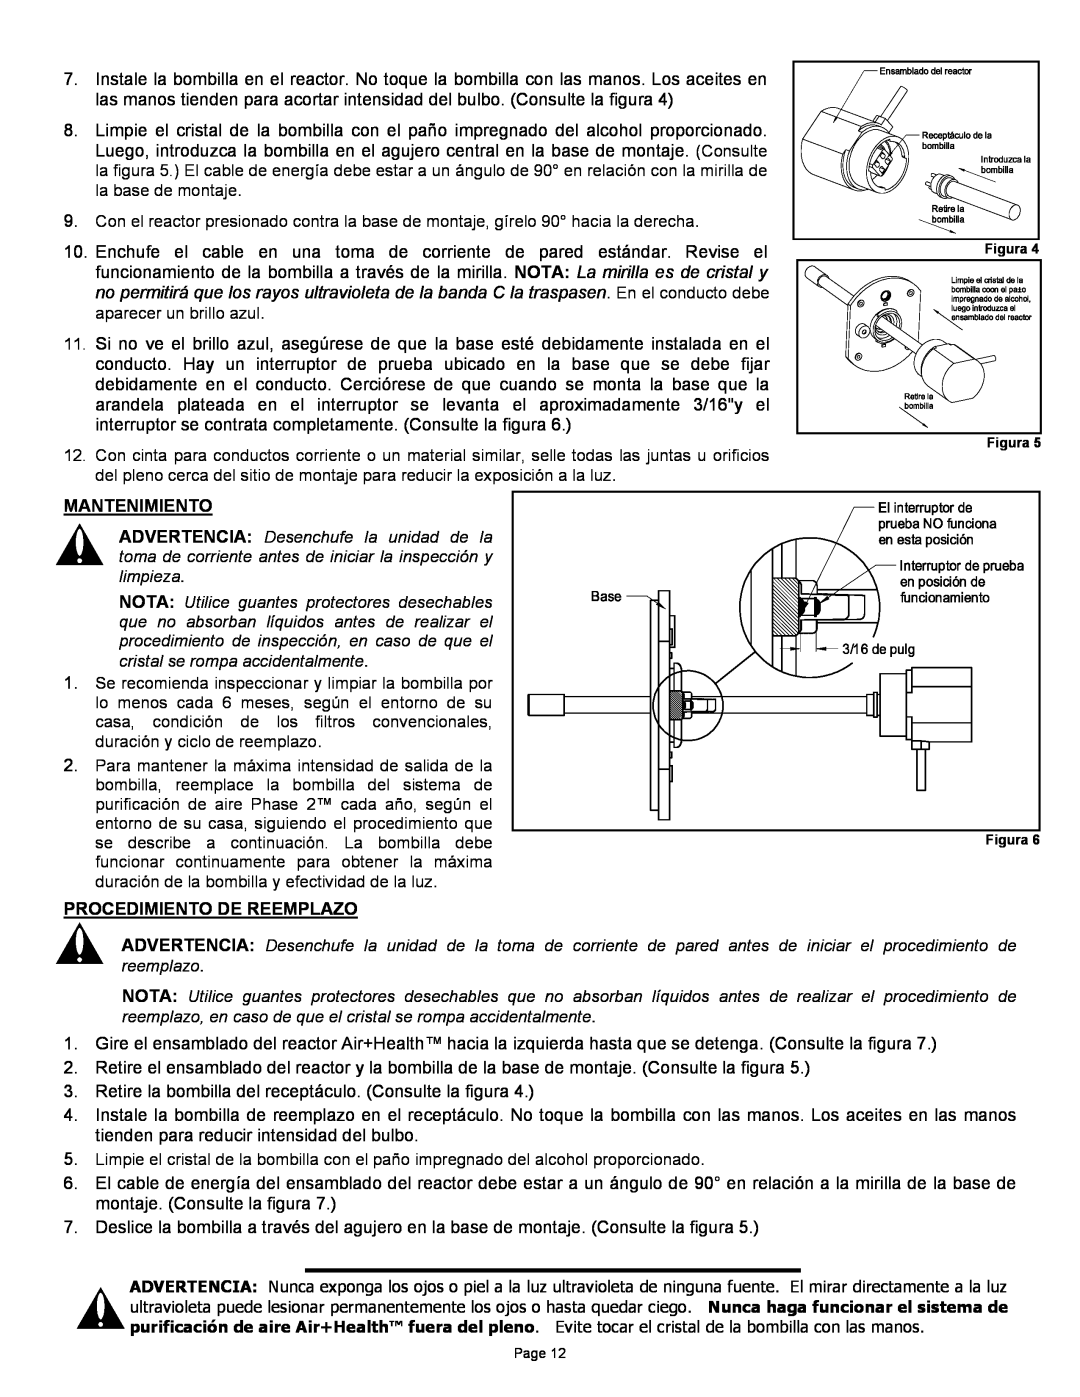 Air Health AH-RL, AH-1 instruction sheet Mantenimiento, Procedimiento De Reemplazo 